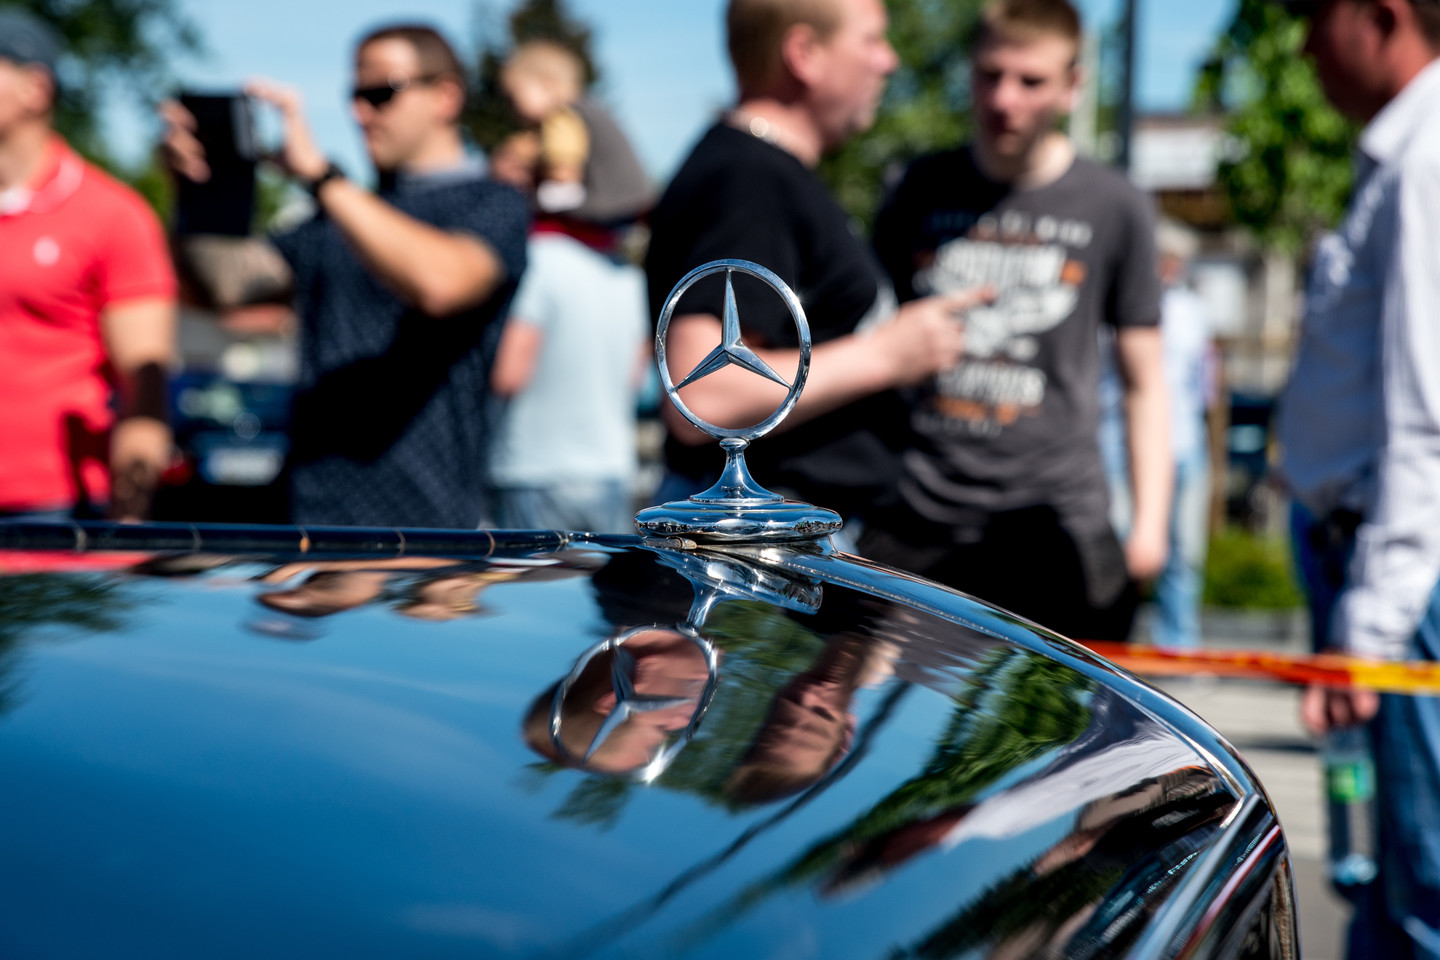  „Mercedes-Benz“ automobilių savininkų susitikimo akimirka.<br> V.Ščiavinsko nuotr.